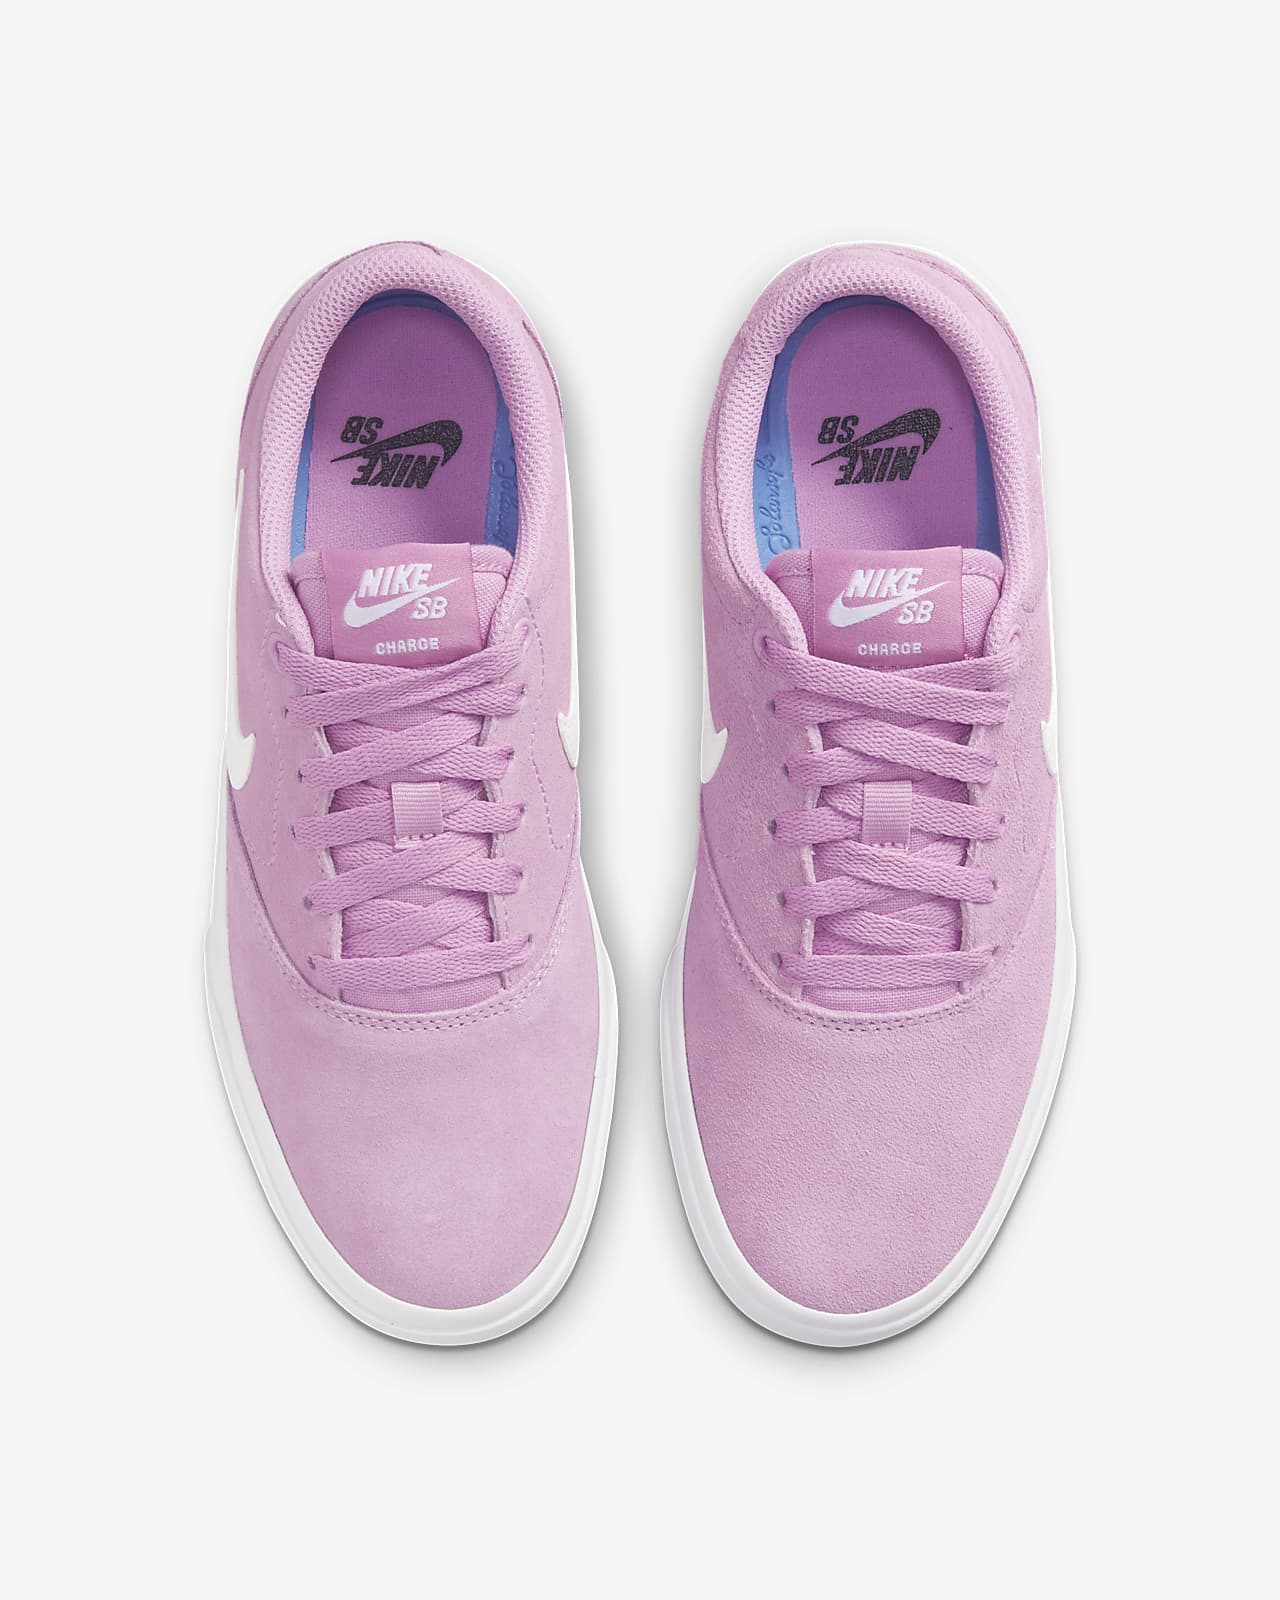 Chaussure de skateboard Nike SB Charge Suede pour Femme. Nike LU